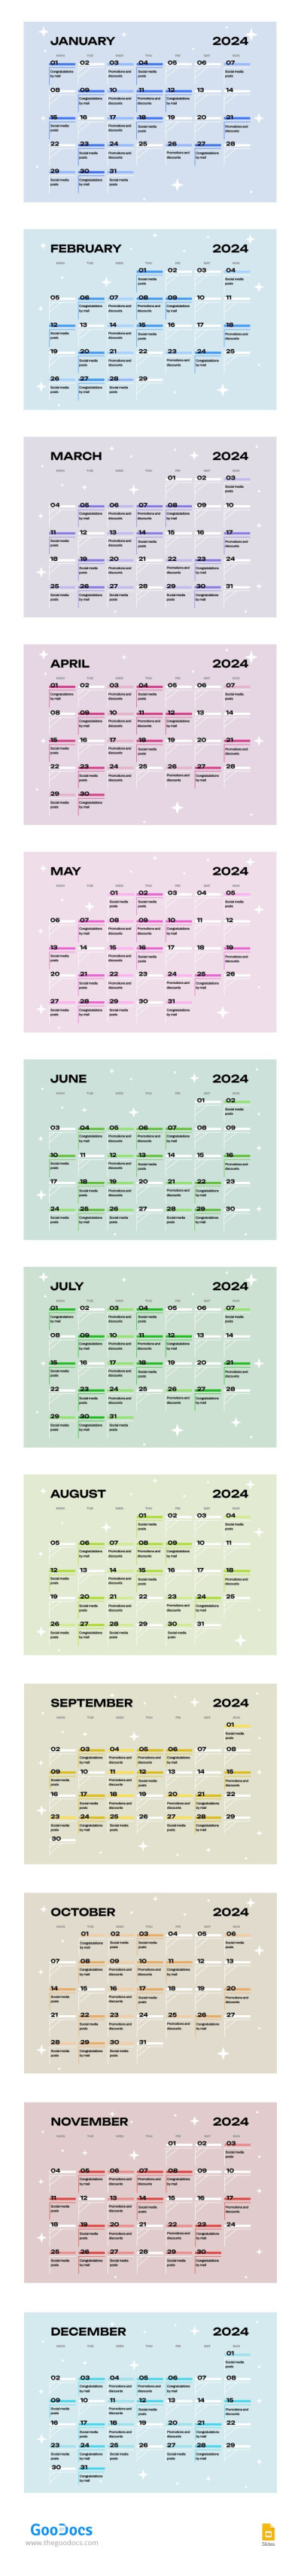 Simple Marketing Content Calendar - Marketing Calendars